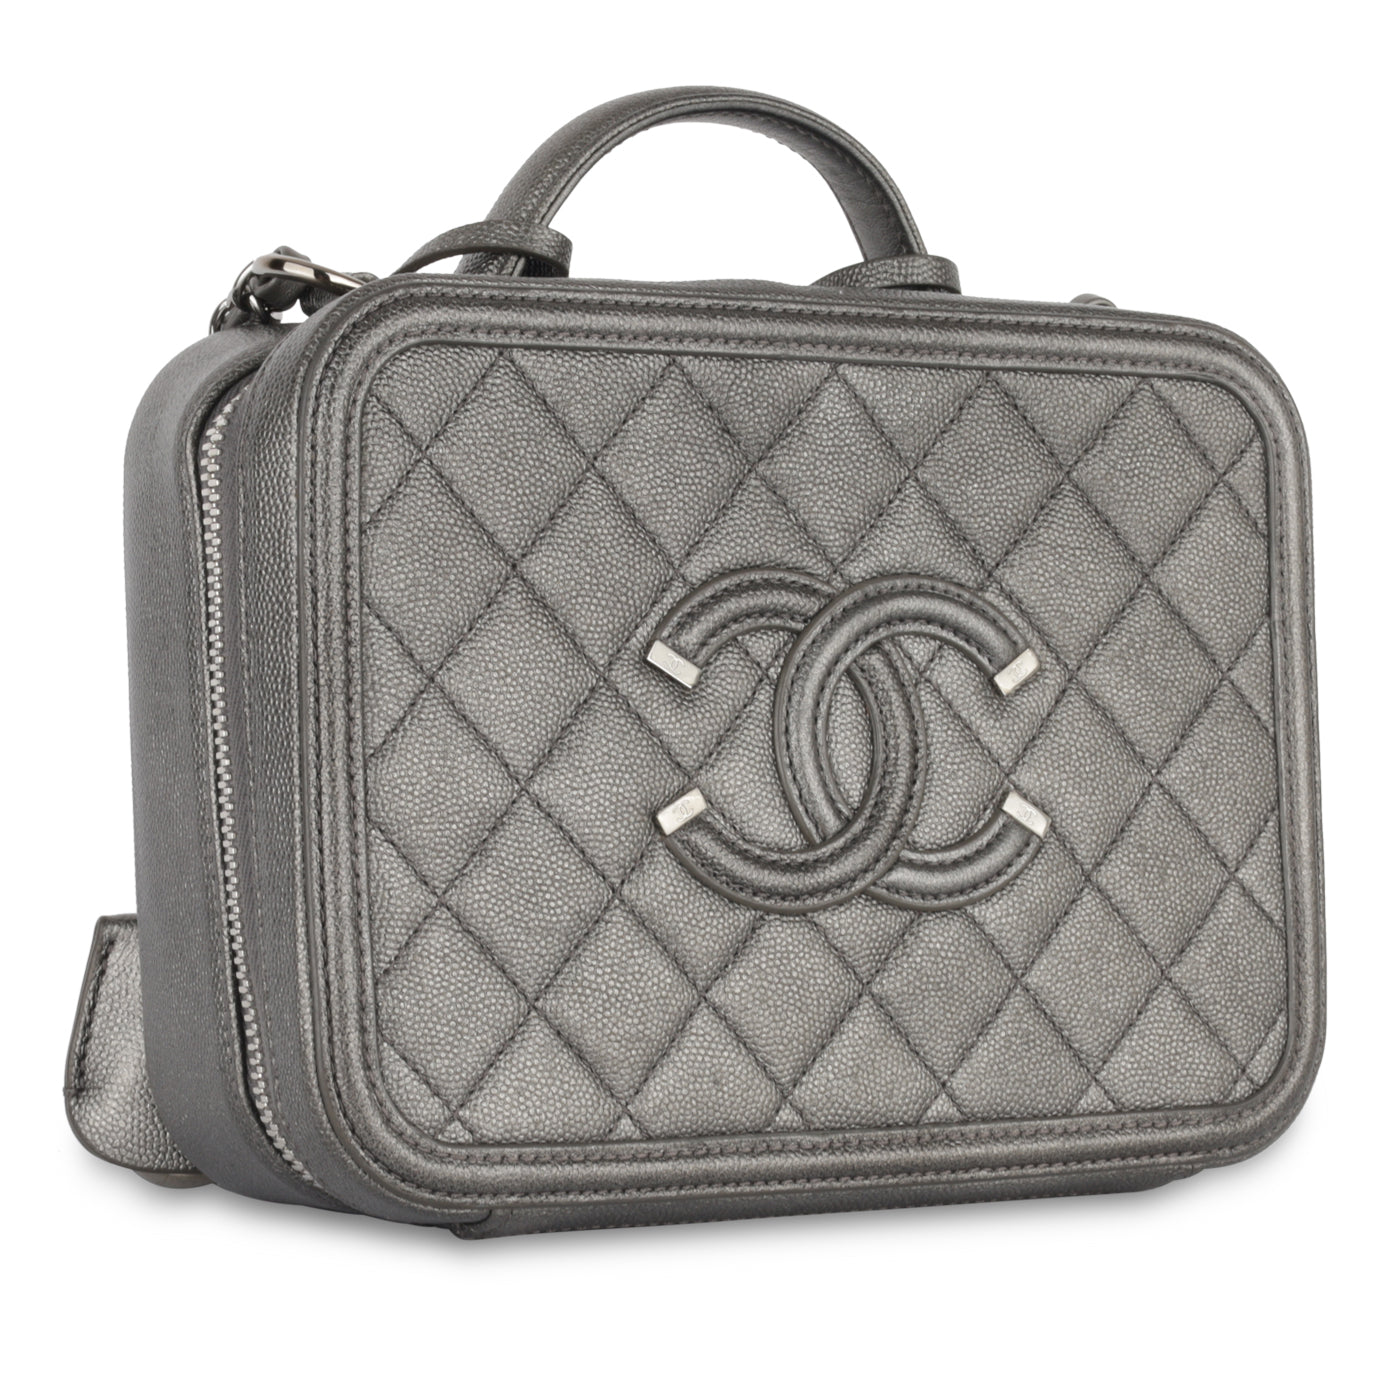 Chanel - Medium Filigree CC Vanity Case - Metallic Silver Caviar